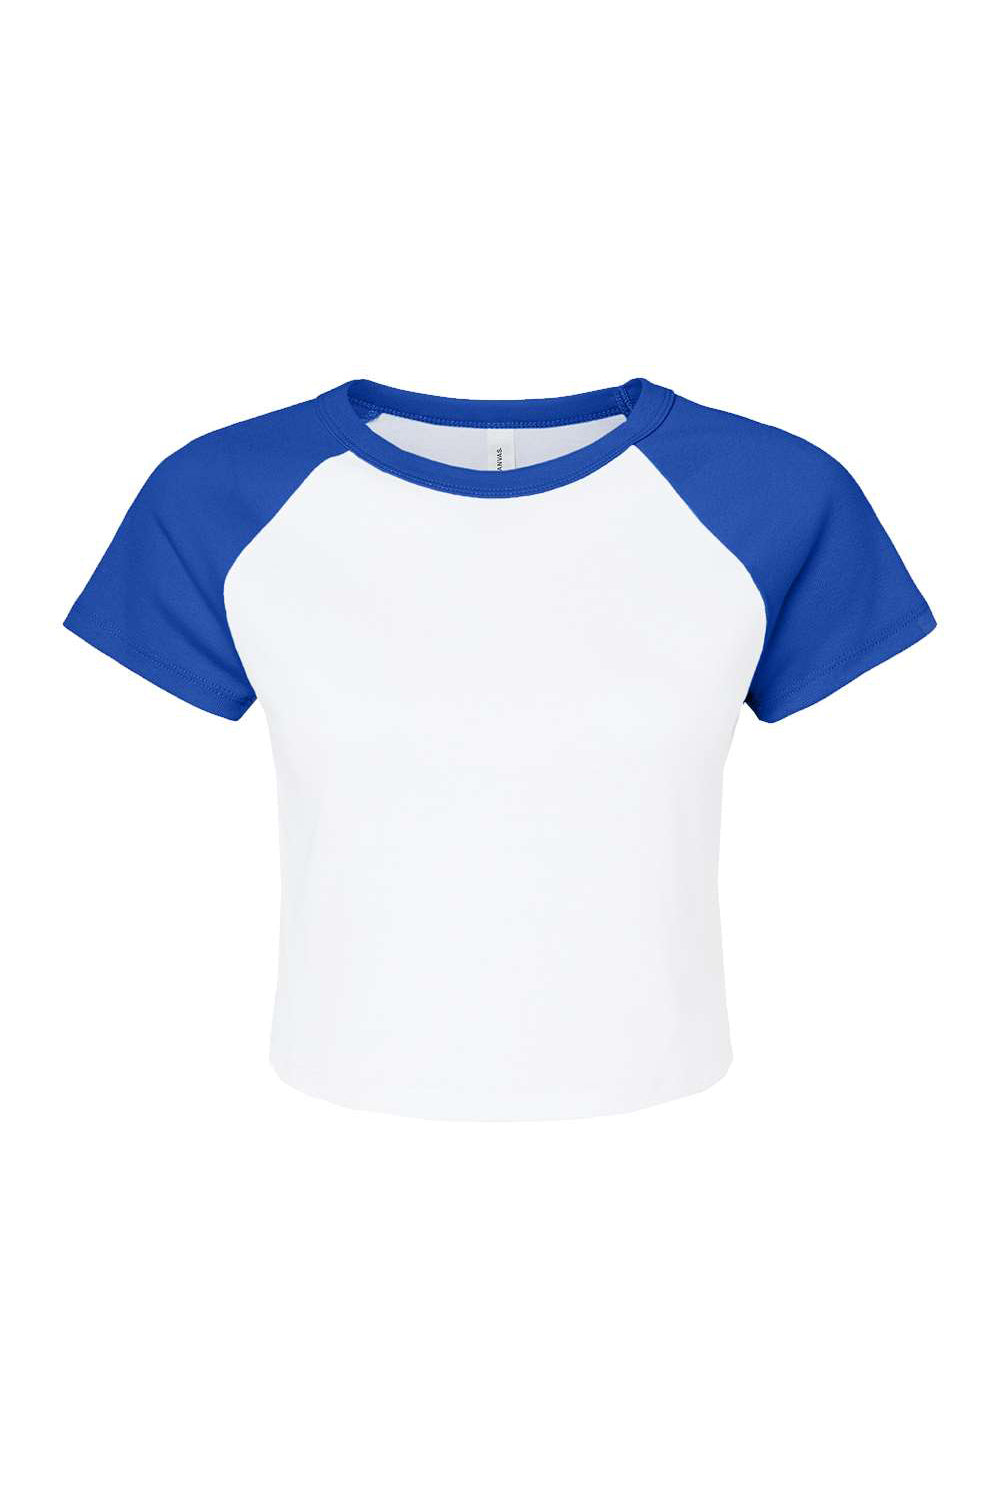 Bella + Canvas 1201 Womens Micro Ribbed Raglan Short Sleeve Crewneck Baby T-Shirt White/True Royal Blue Flat Front